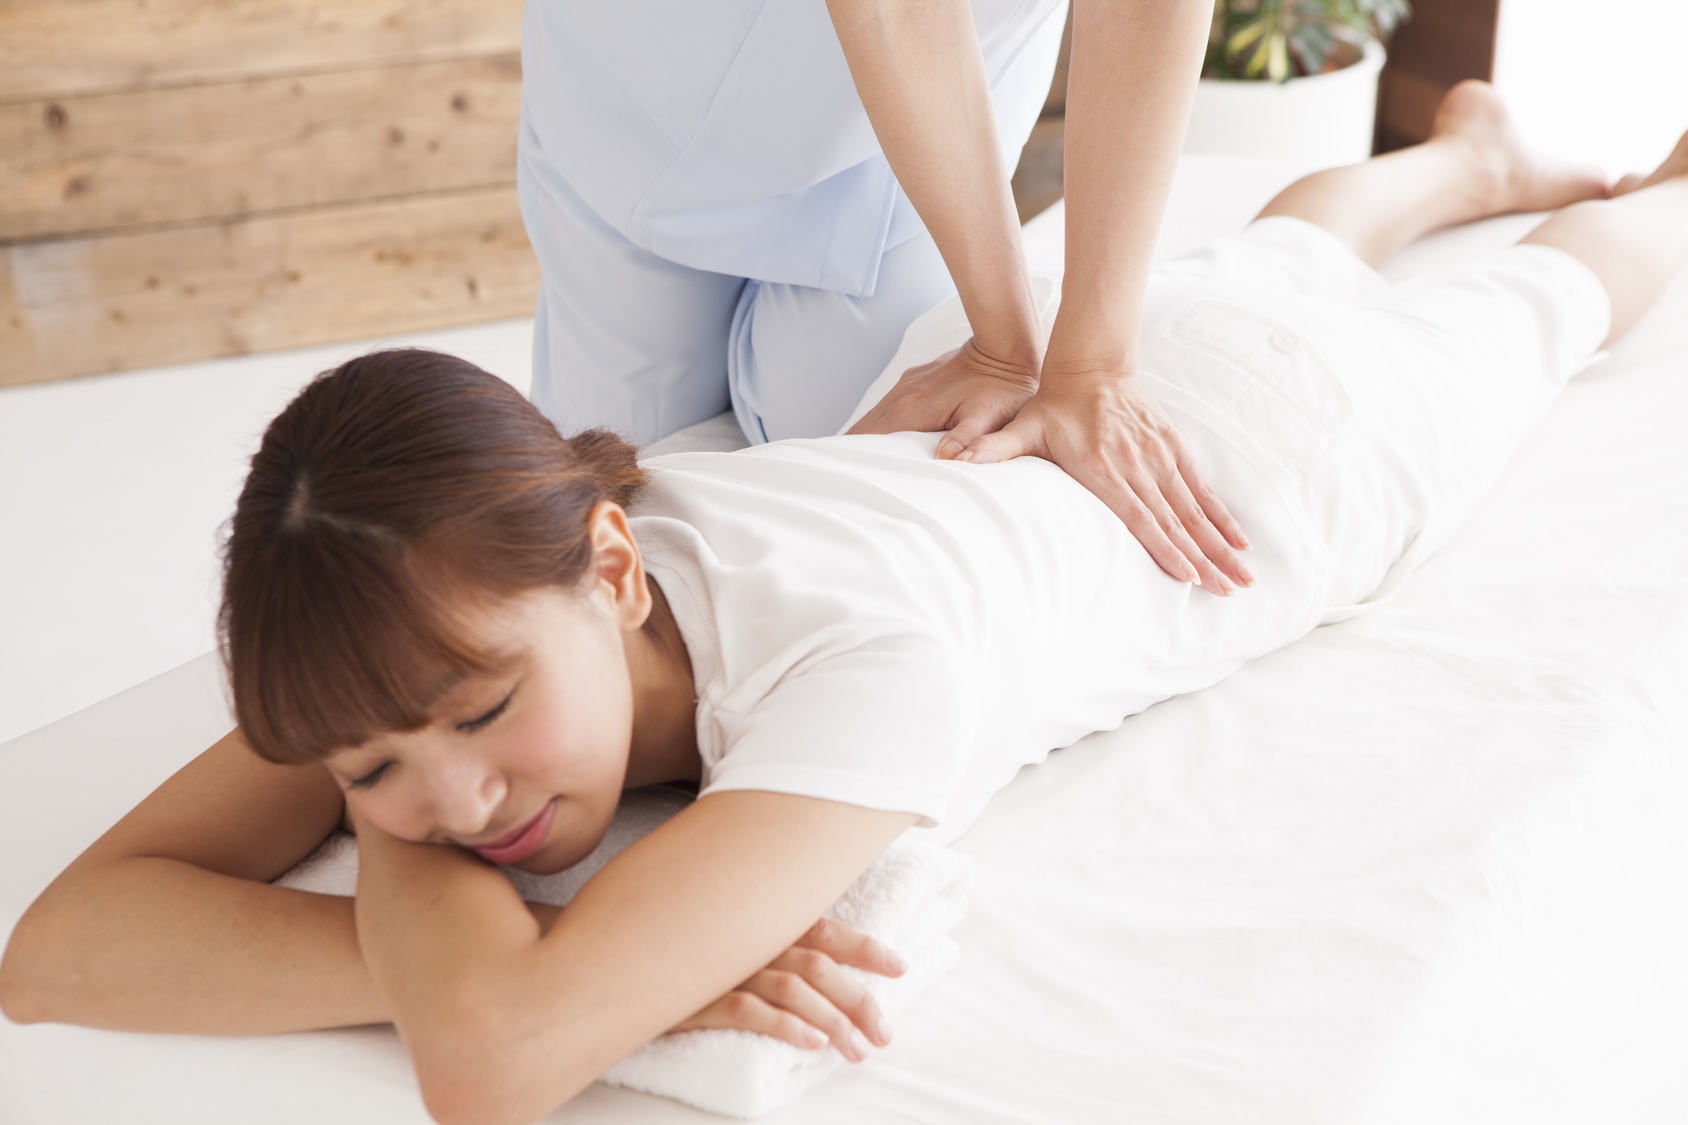 Women are subject to comfortably waist massage